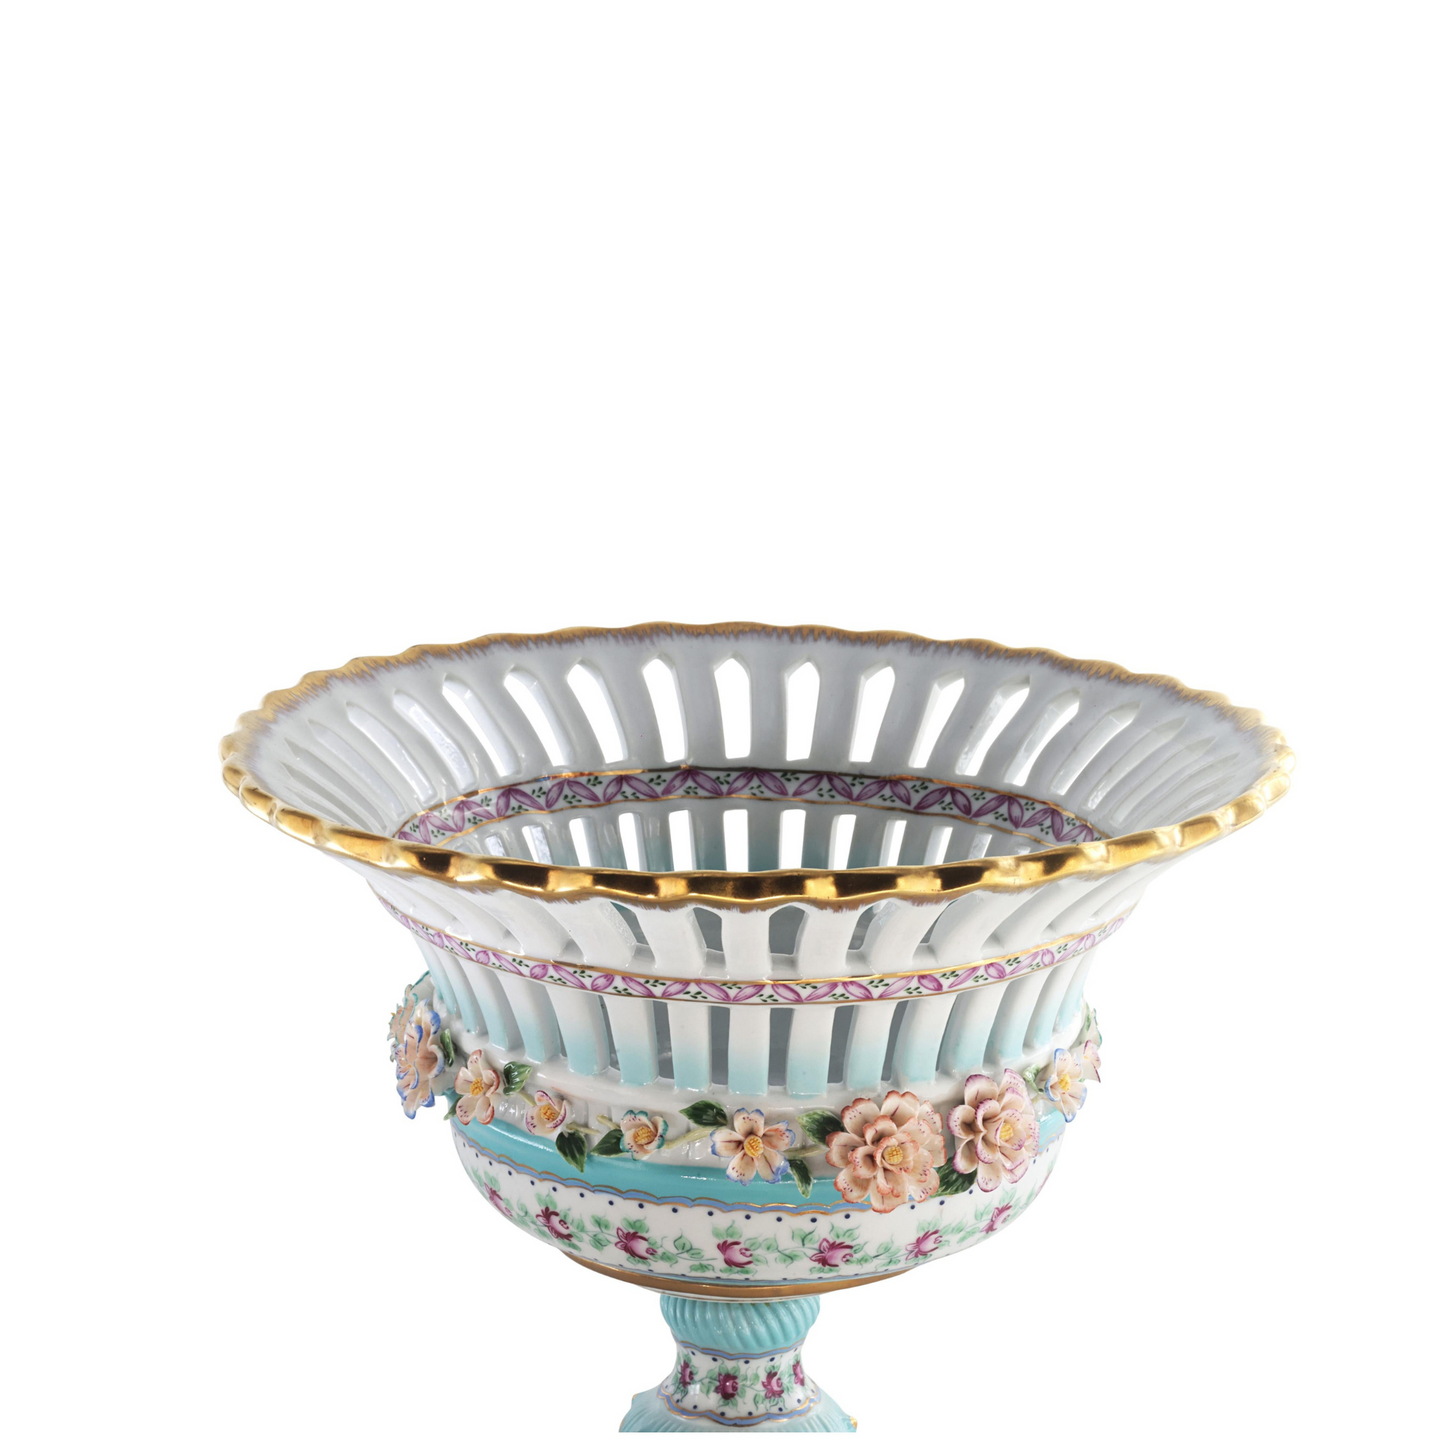 Hand-painted Medium Teal Floral Decorative Bowl